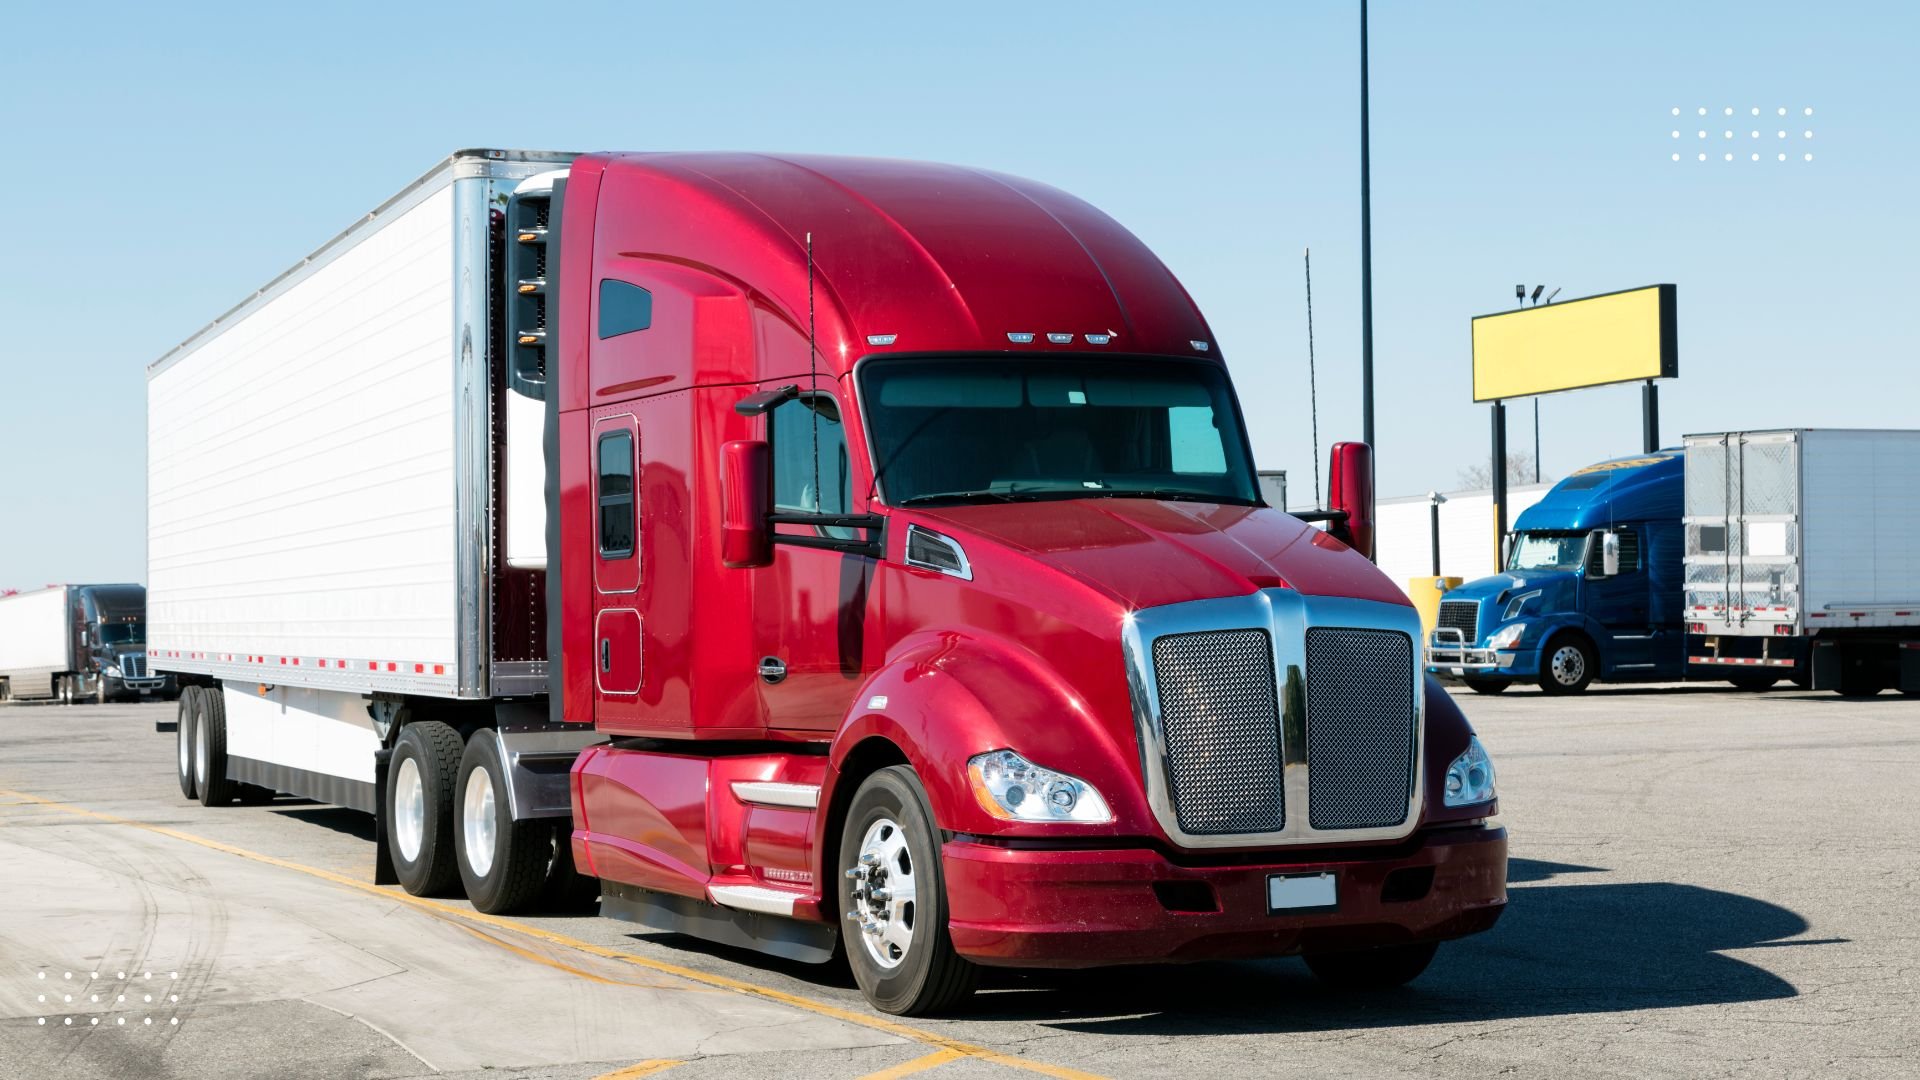 trucking trucker personal safety tips canada us shipping logistics, customs transport hazards